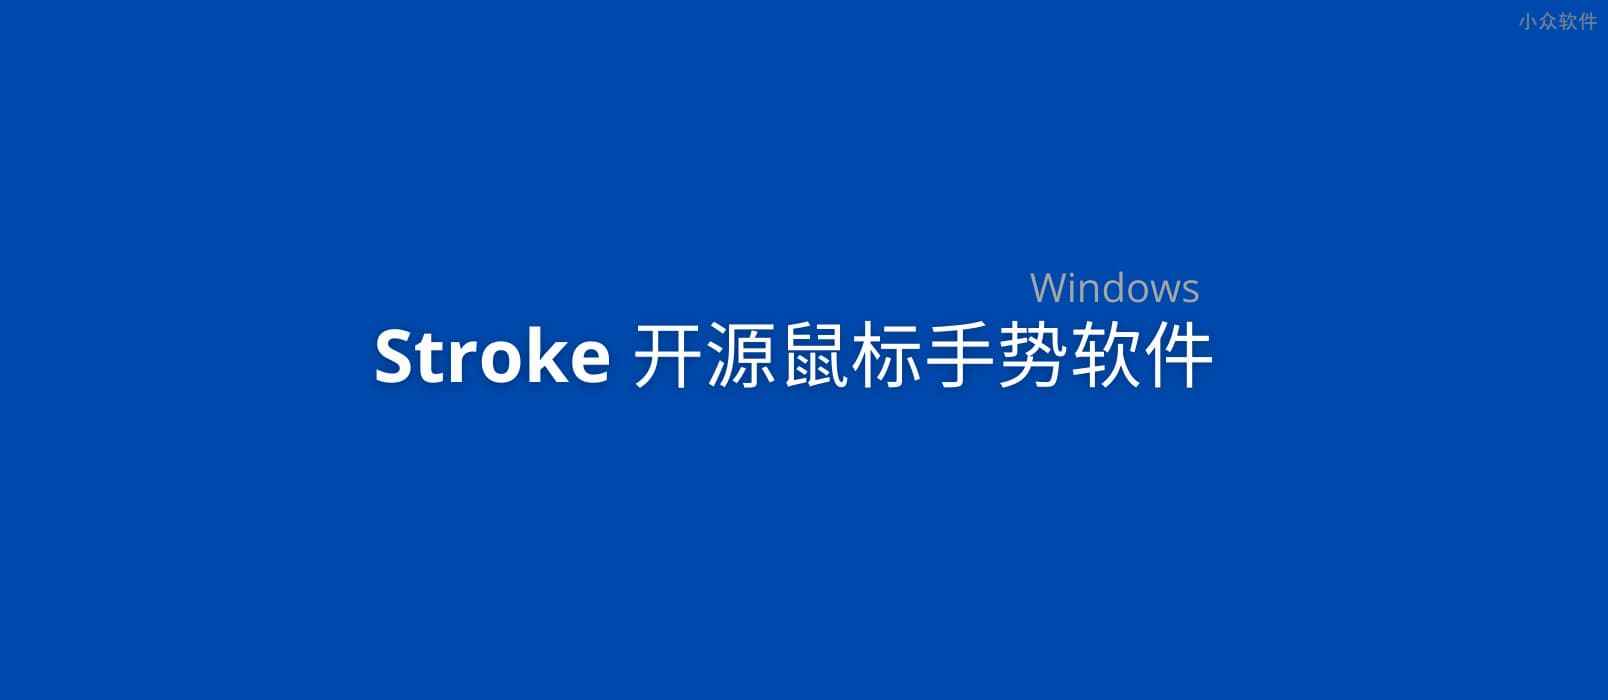 Stroke – 开源鼠标手势软件[Windows]